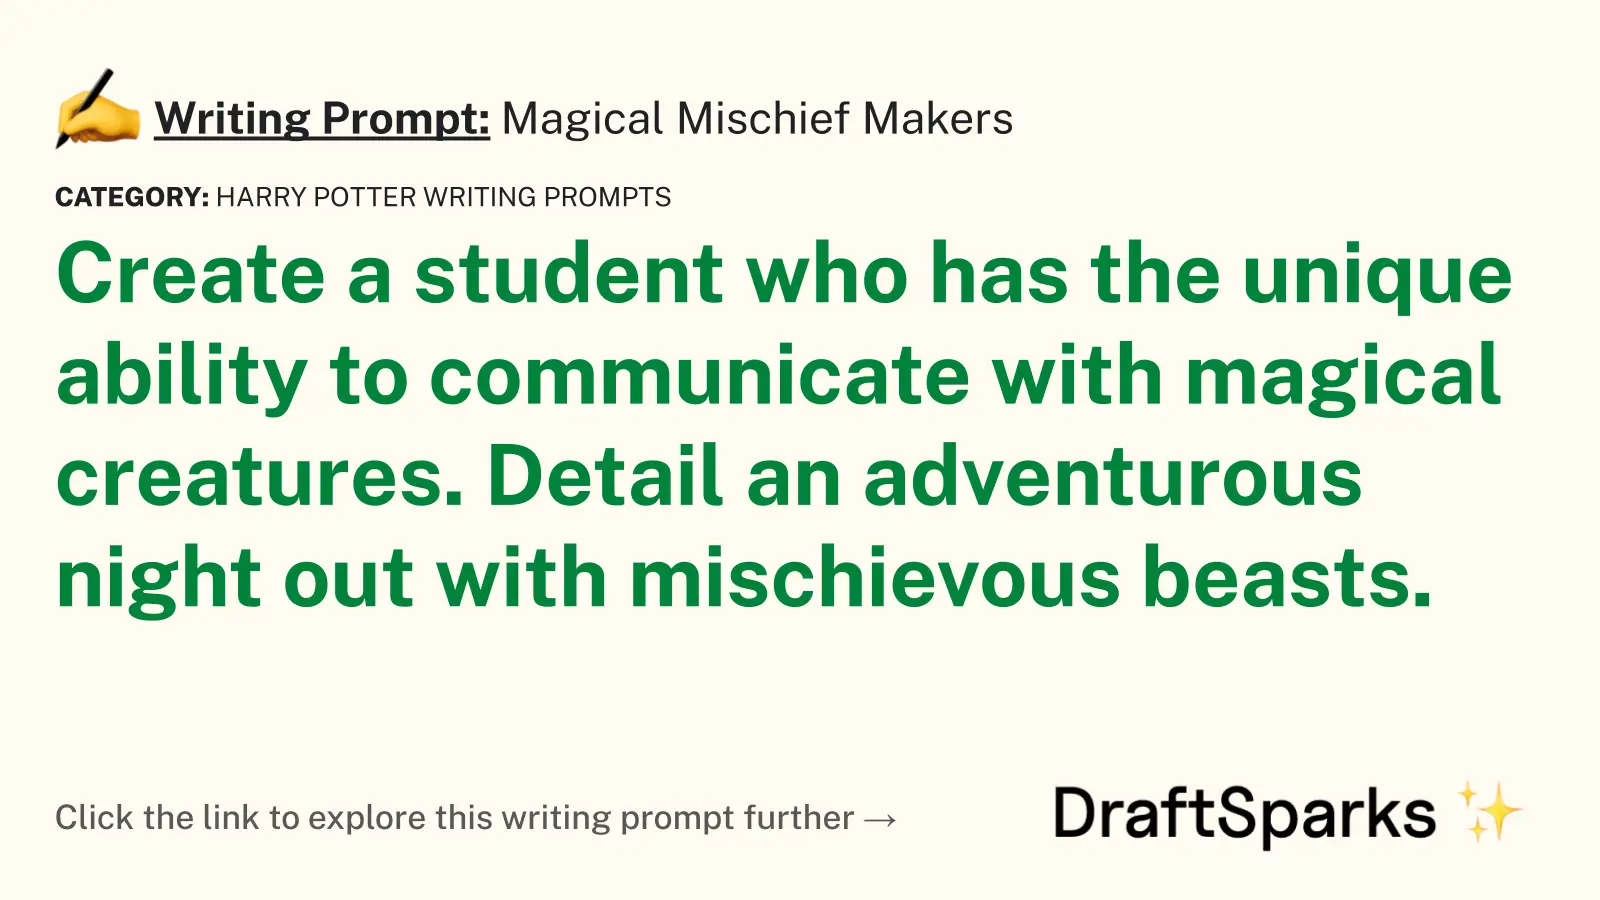 Magical Mischief Makers